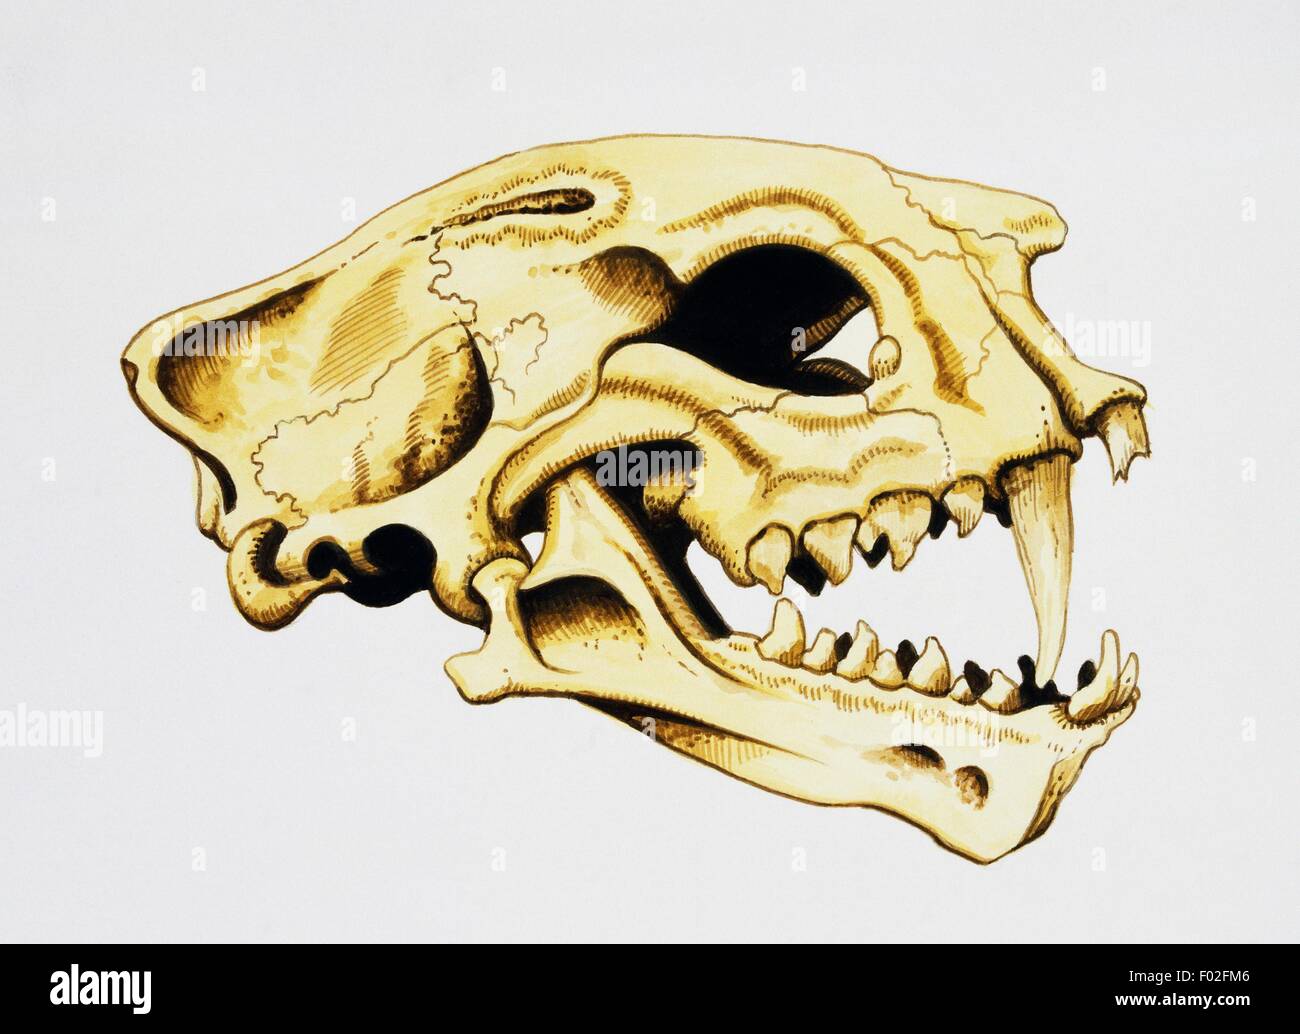 Minravus skull, Nimravidae, Oligocene-Miocene. Artwork by Tony Jackson. Stock Photo